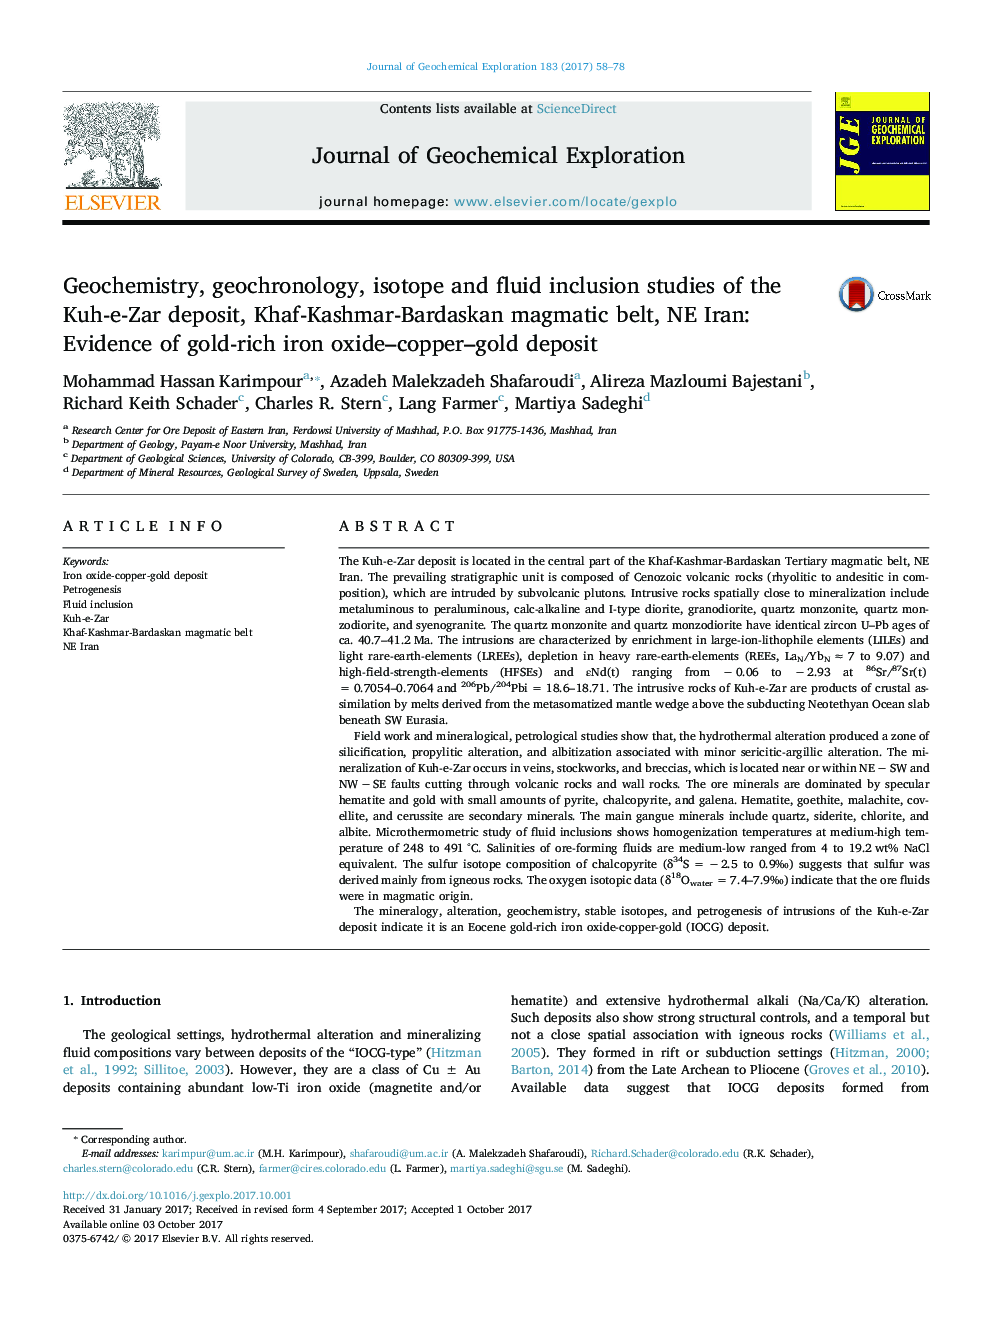 Geochemistry, geochronology, isotope and fluid inclusion studies of the Kuh-e-Zar deposit, Khaf-Kashmar-Bardaskan magmatic belt, NE Iran: Evidence of gold-rich iron oxide-copper-gold deposit